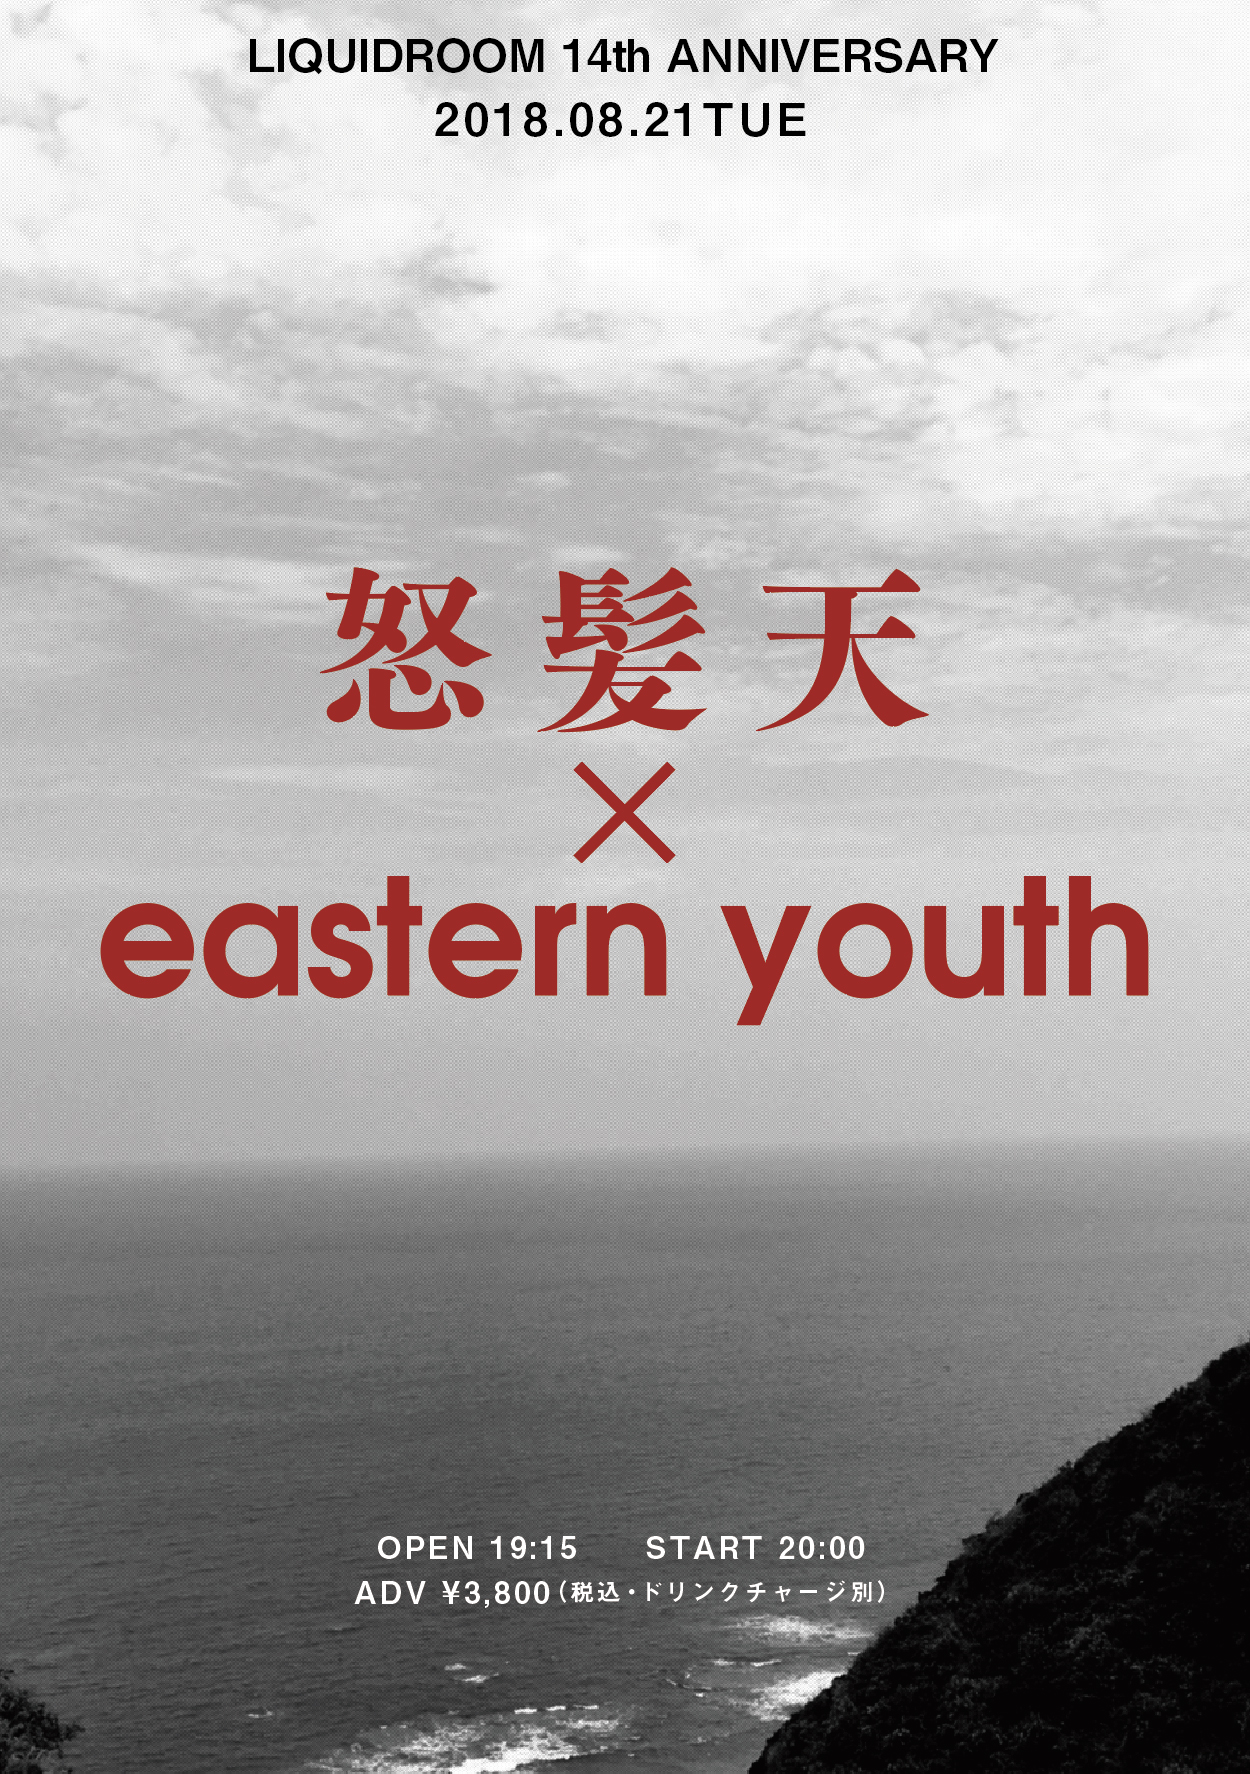 怒髪天 x eastern youth